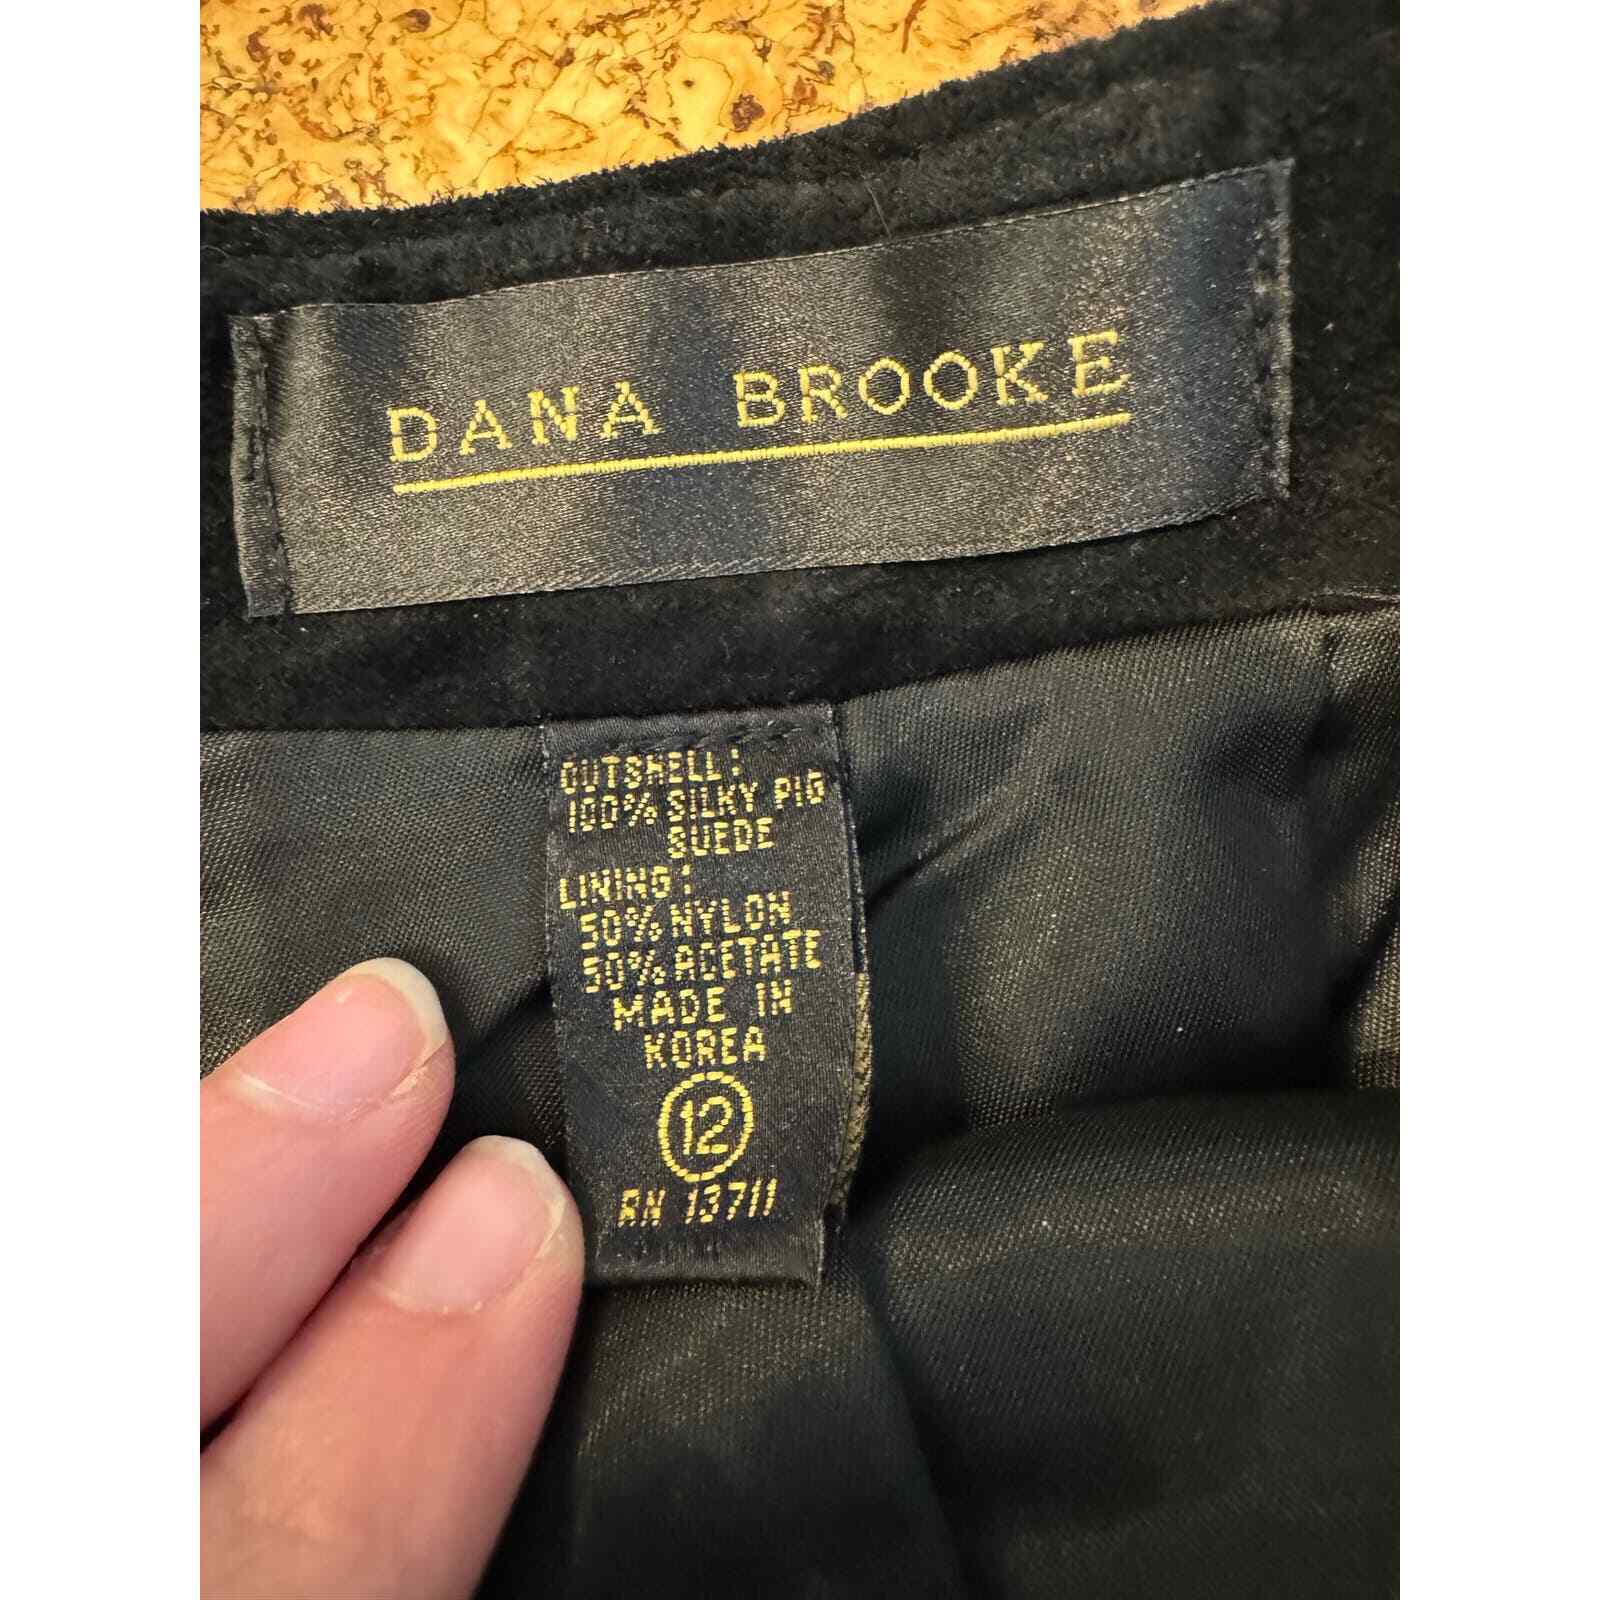 Dana Brooke 90s 100% silky pig Suede leather skir… - image 3